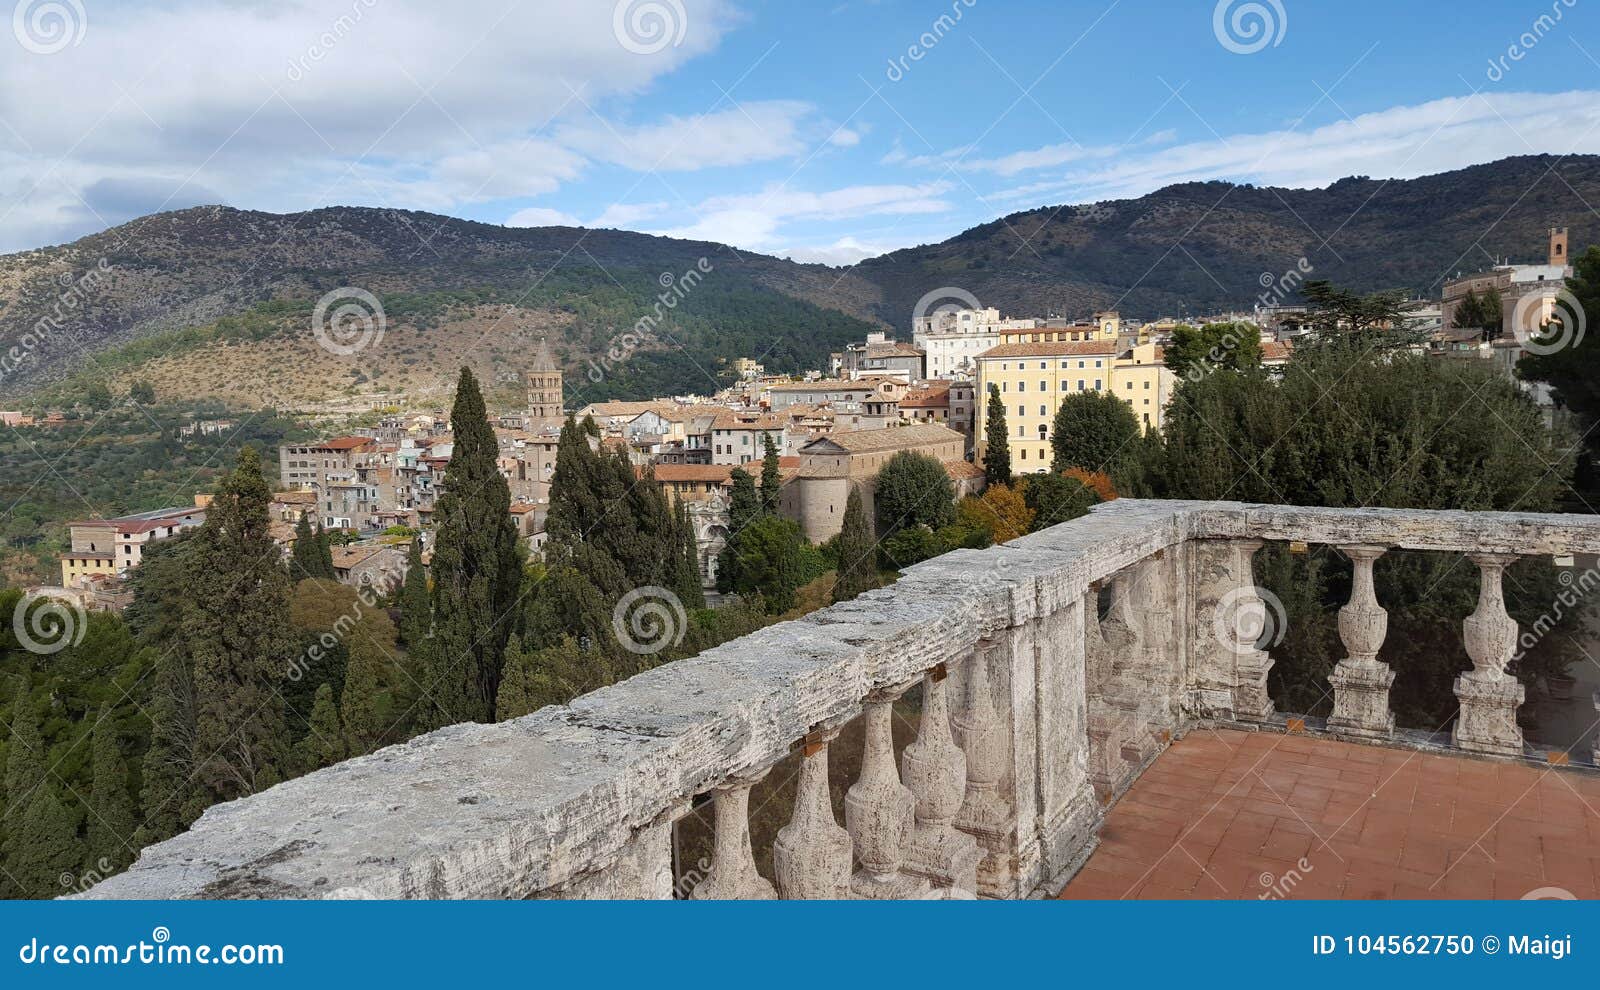 View over Tivoli from Villa D'Este